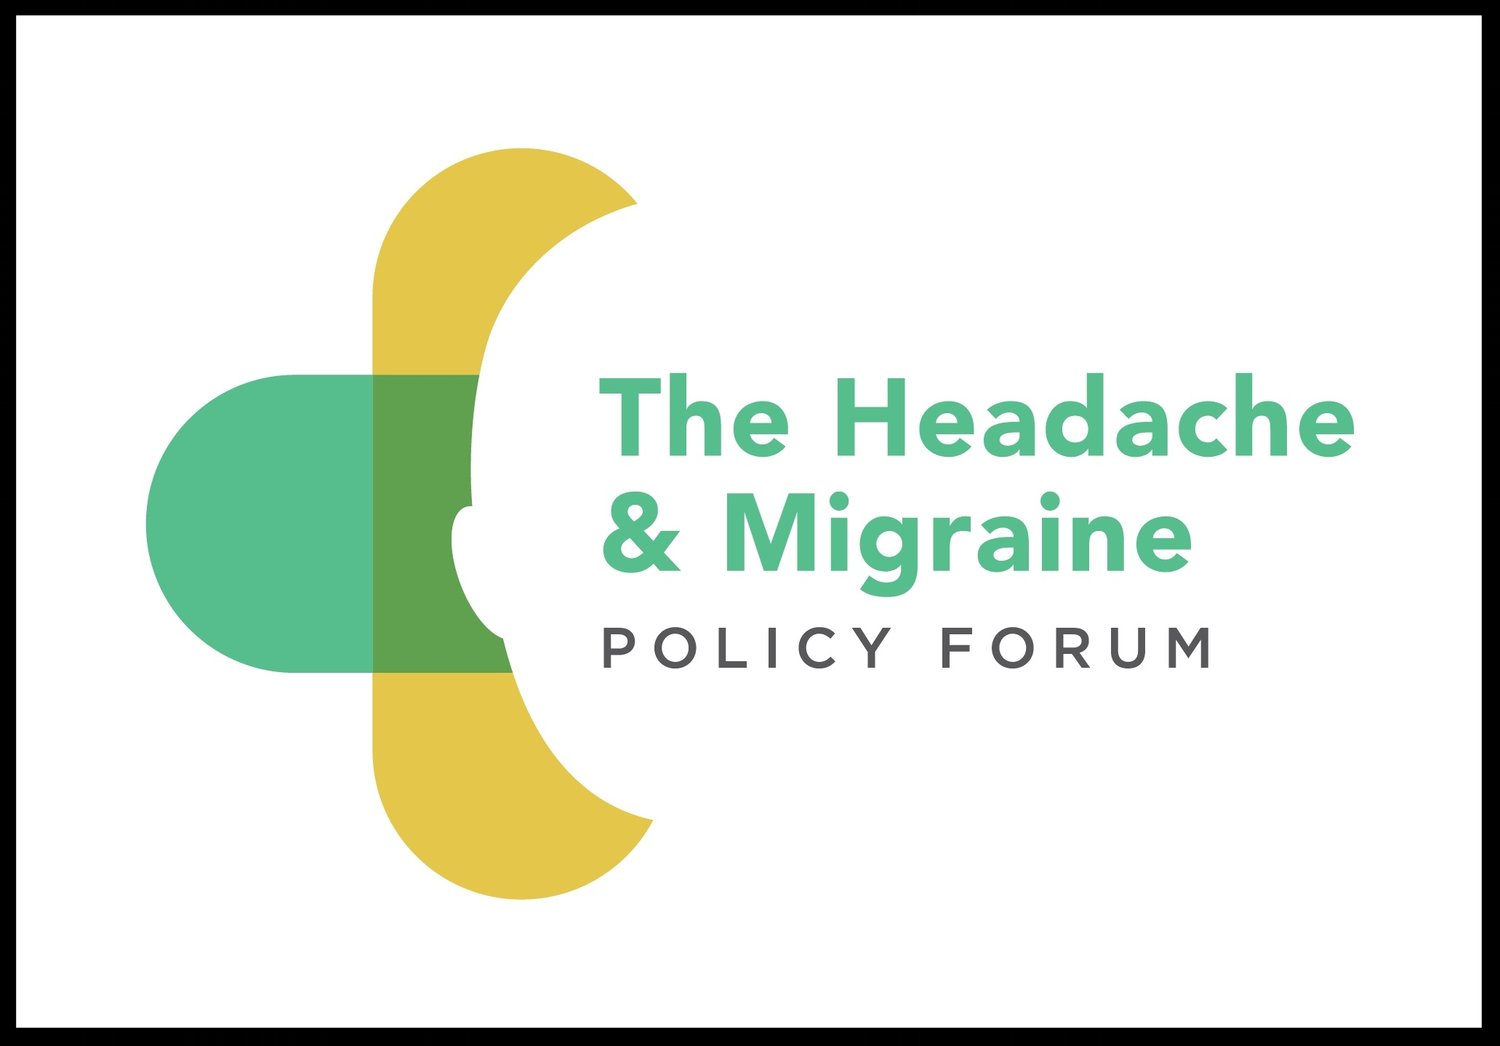 The Headache & Migraine Policy Forum